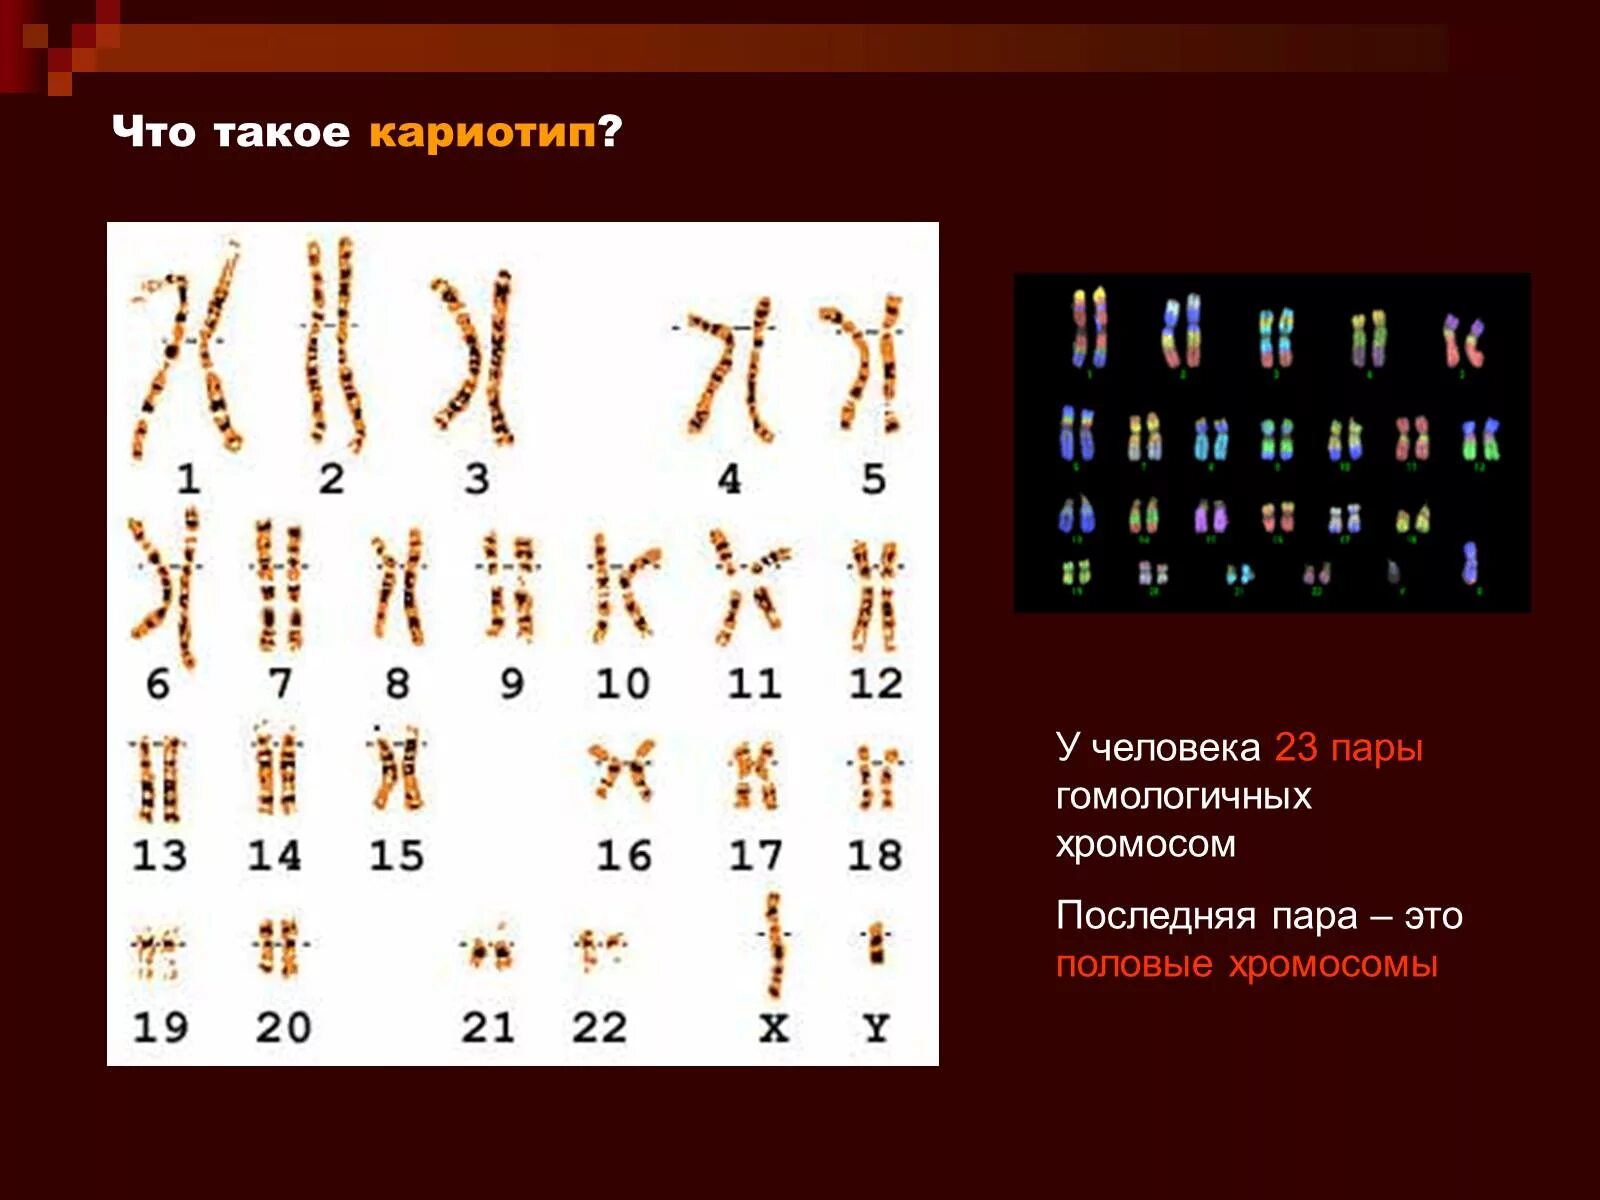 Количество хромосом в кариотипе человека. Кариотип человека. 23 Пары хромосом у человека. Кариотип человека хромосомы. Кариотип человека пары хромосом.